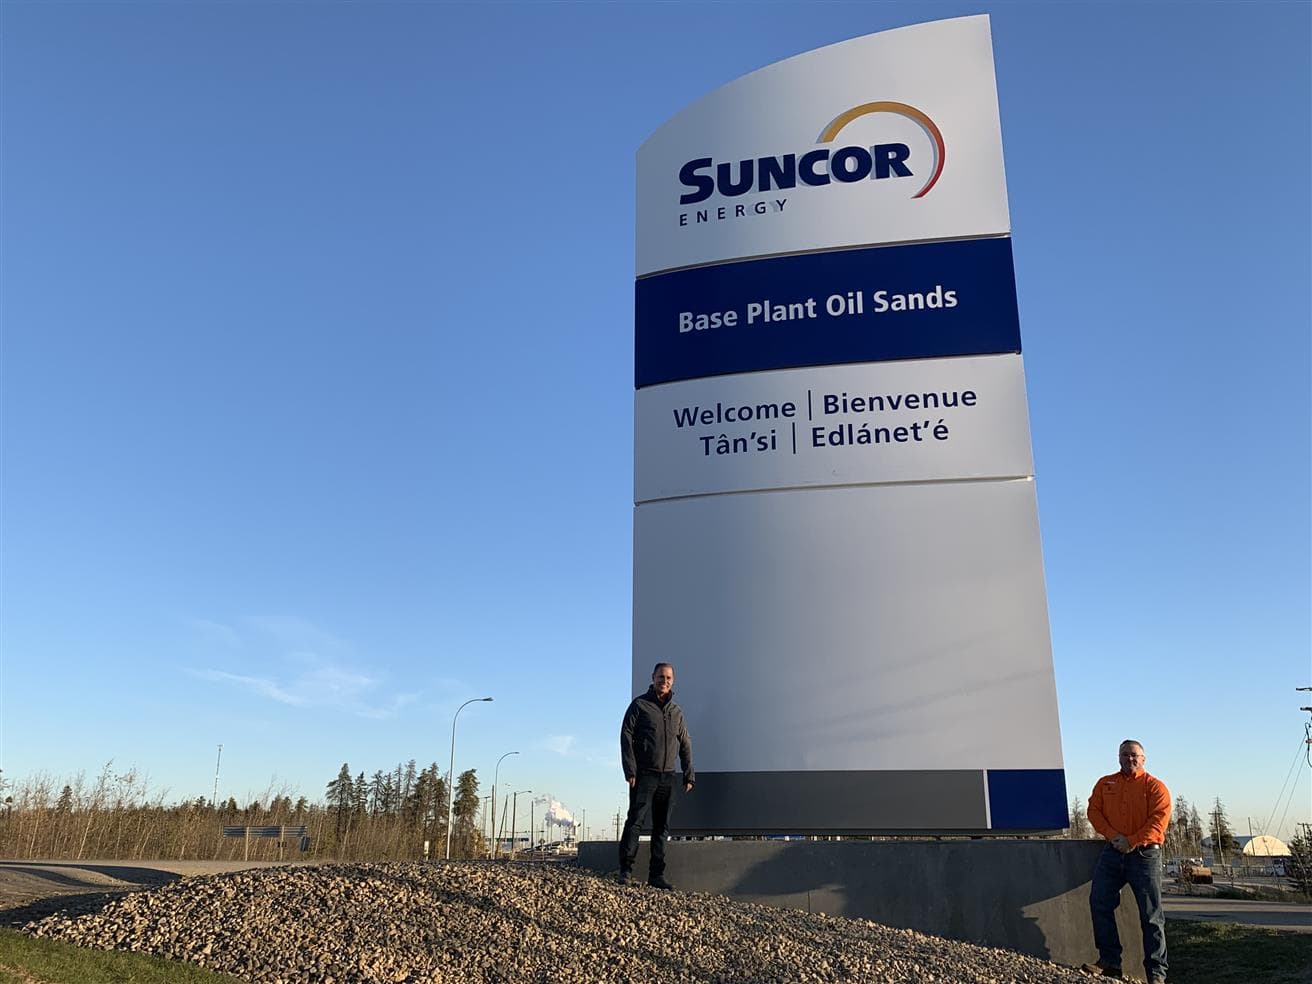 Panneau de plante de base avec logo Suncor Energy